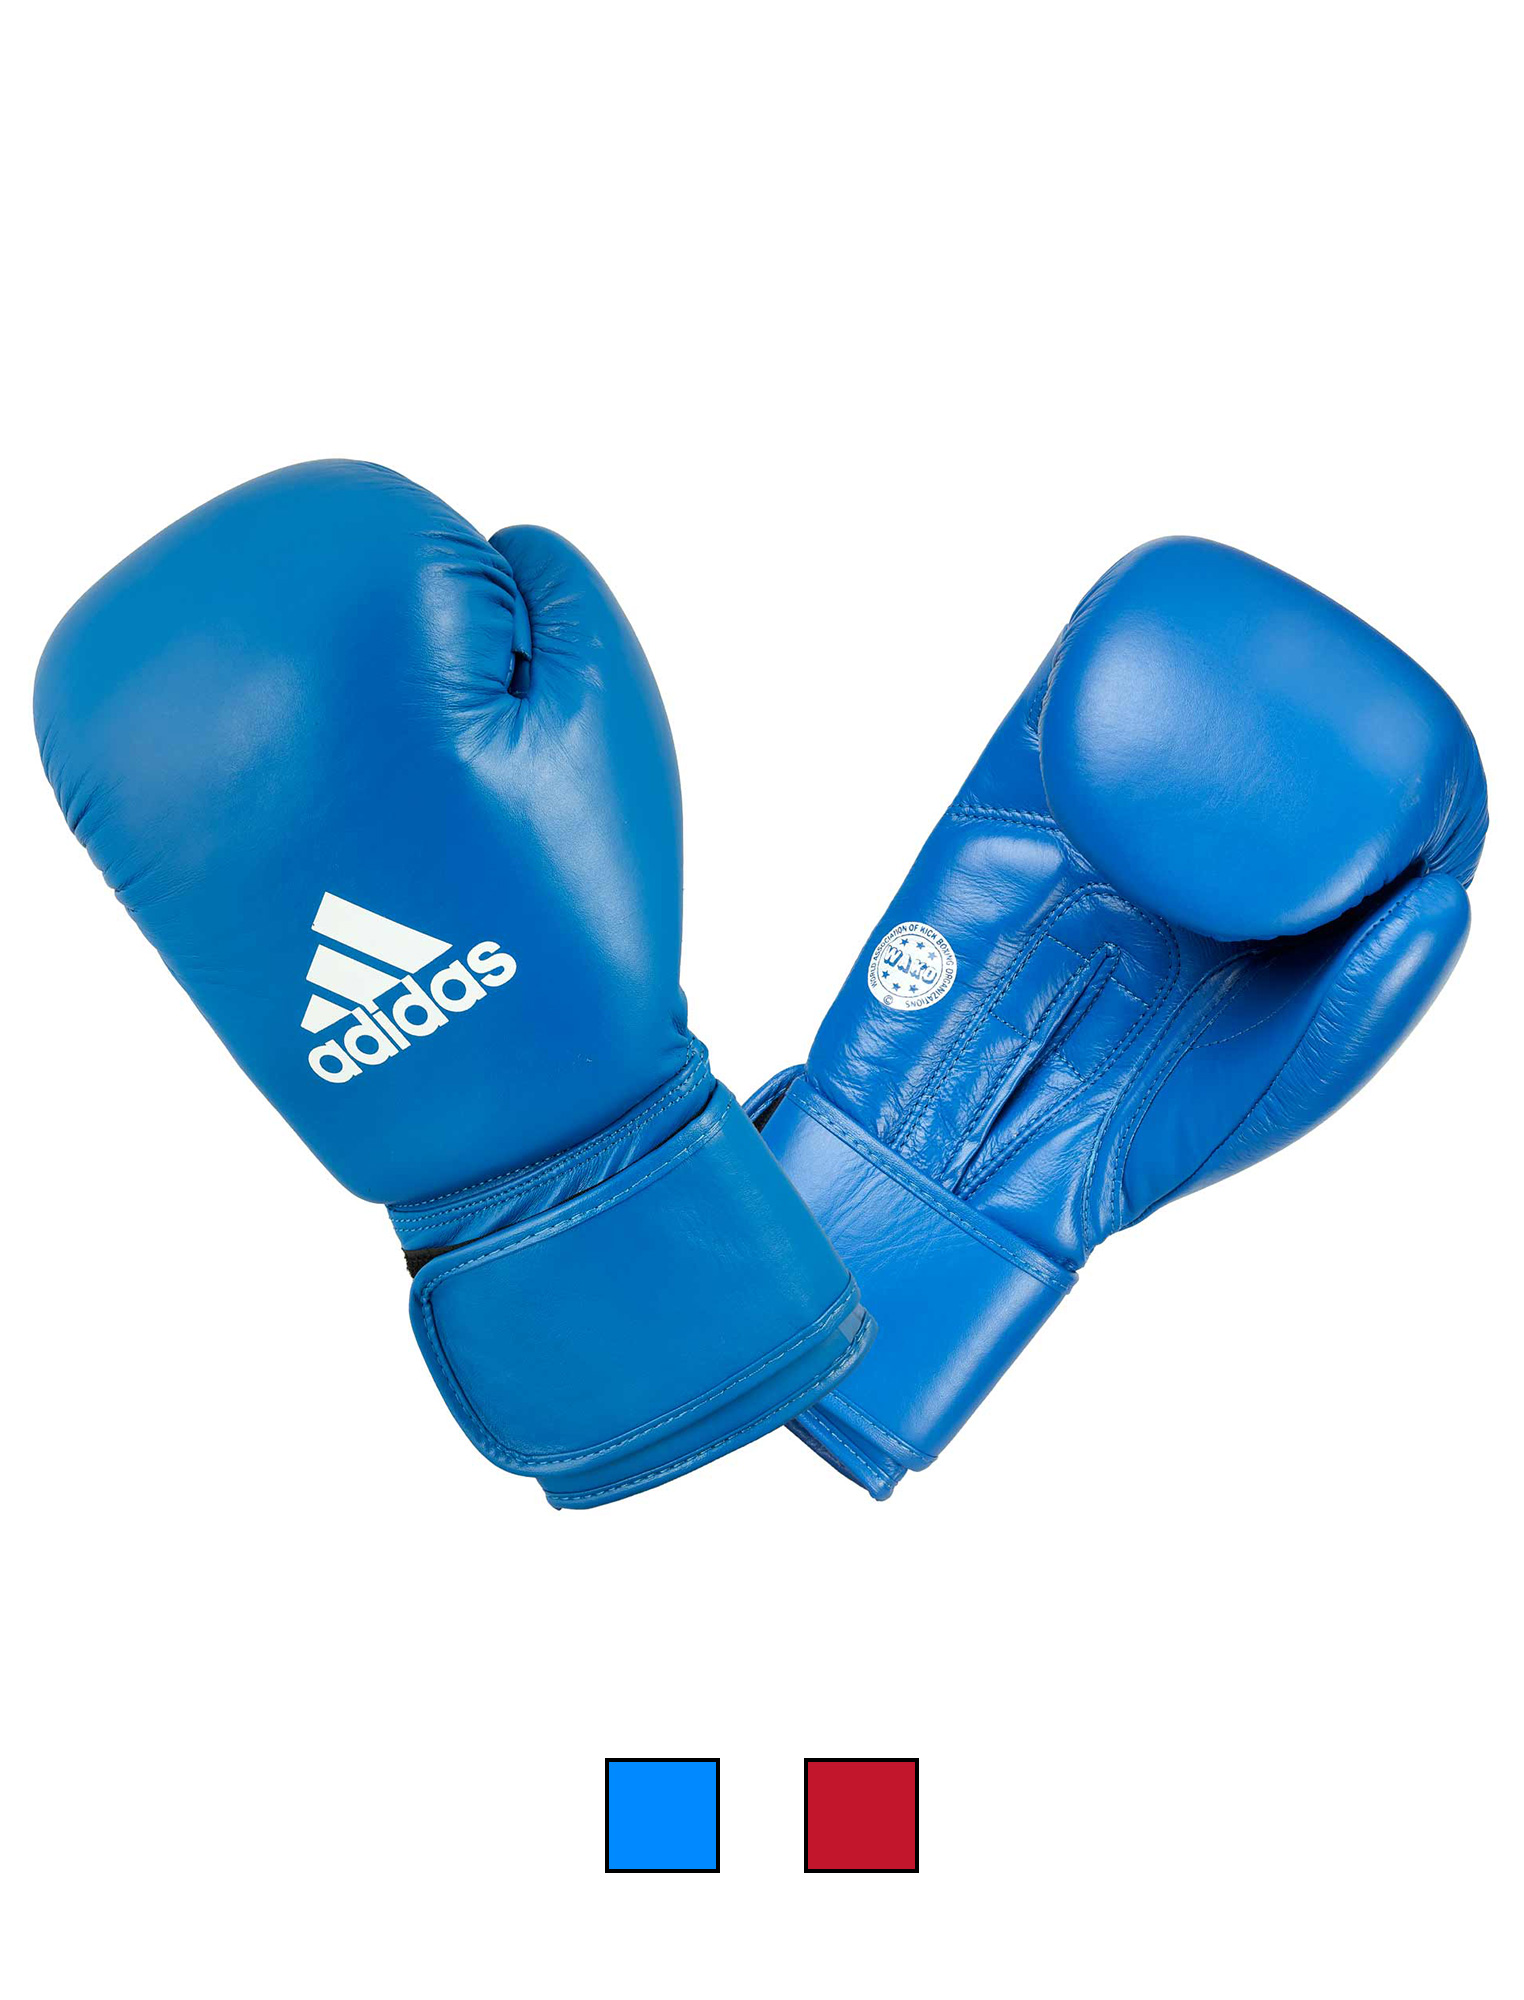 adidas WAKO amateur boxing glove ADIWAKOG1 10 oz blue